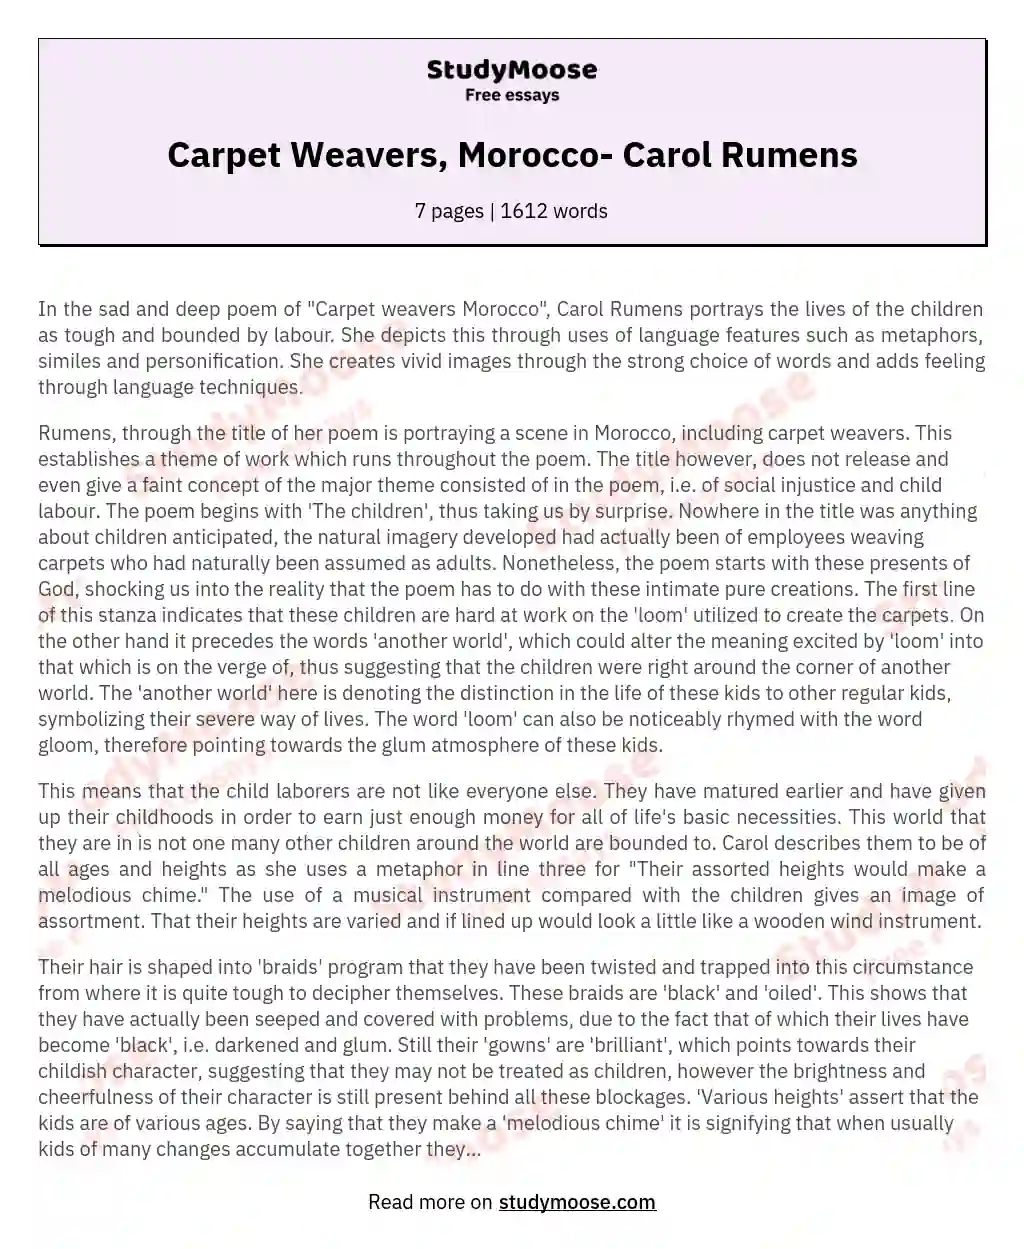 Carpet Weavers, Morocco- Carol Rumens